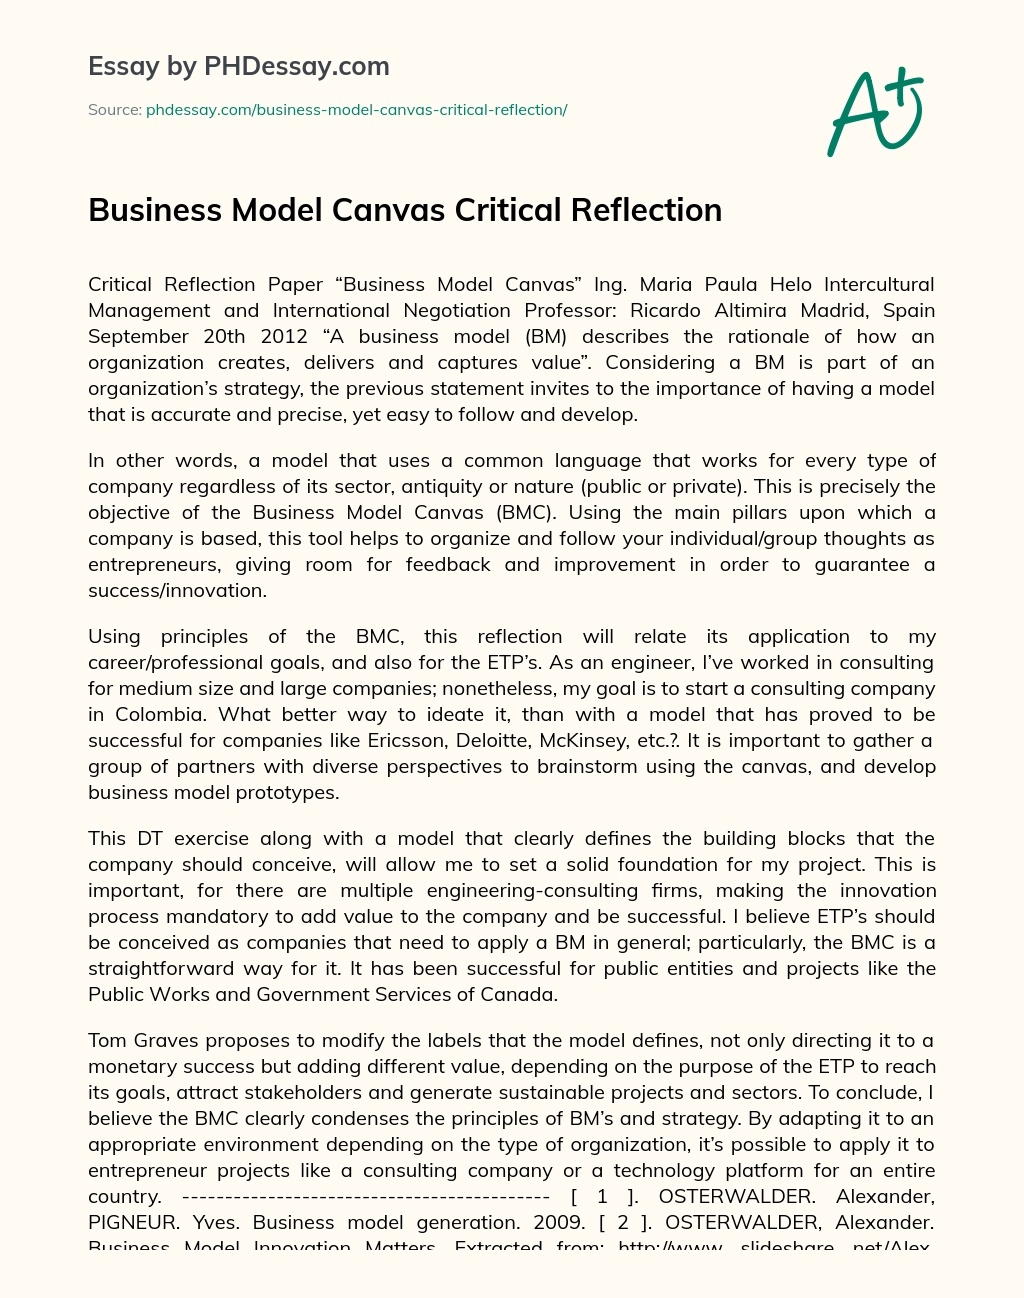 Business Model Canvas Critical Reflection essay